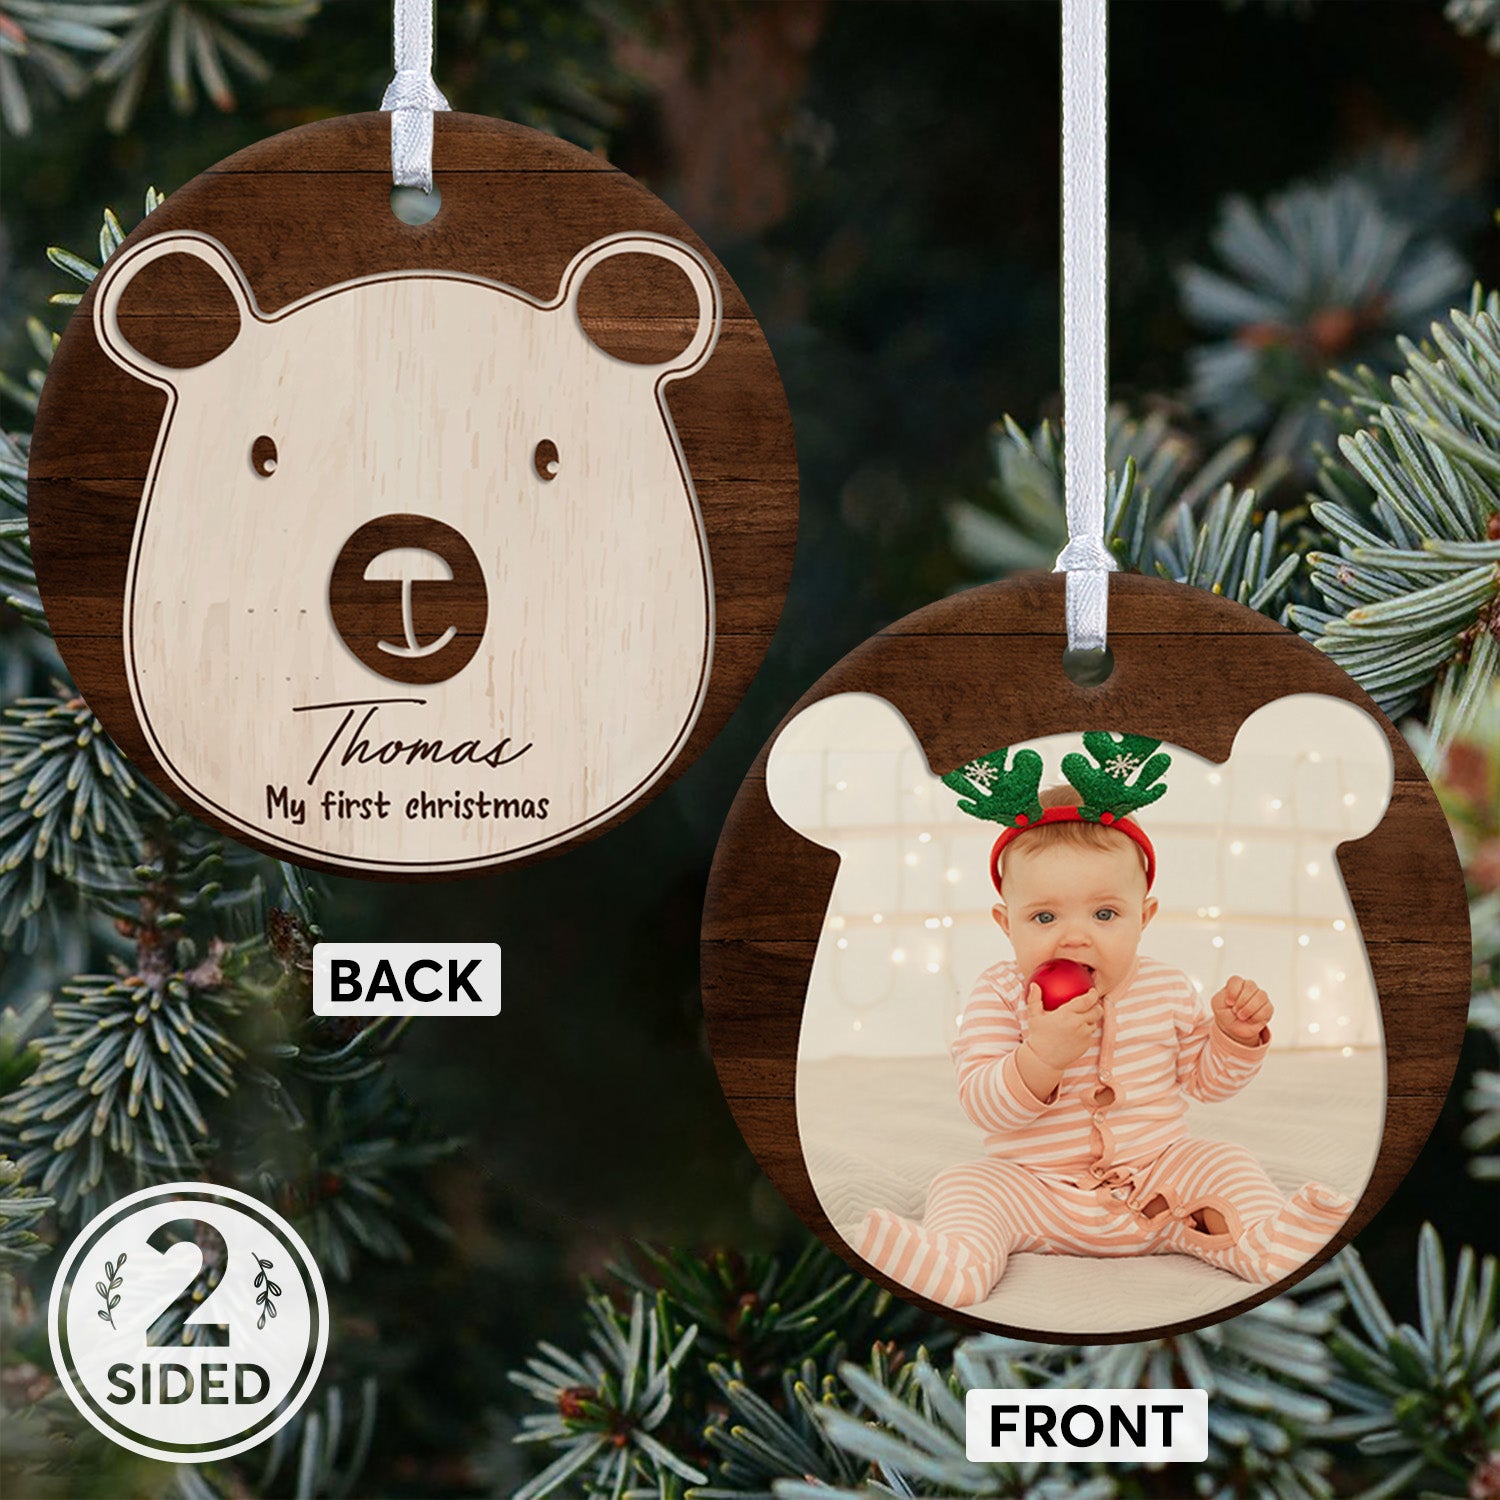 Christmas Ornaments, Custom Photo, Family Name, Christmas Bear, My First Christmas, Date & Text Decorative Christmas Circle Ornament 2 Sided